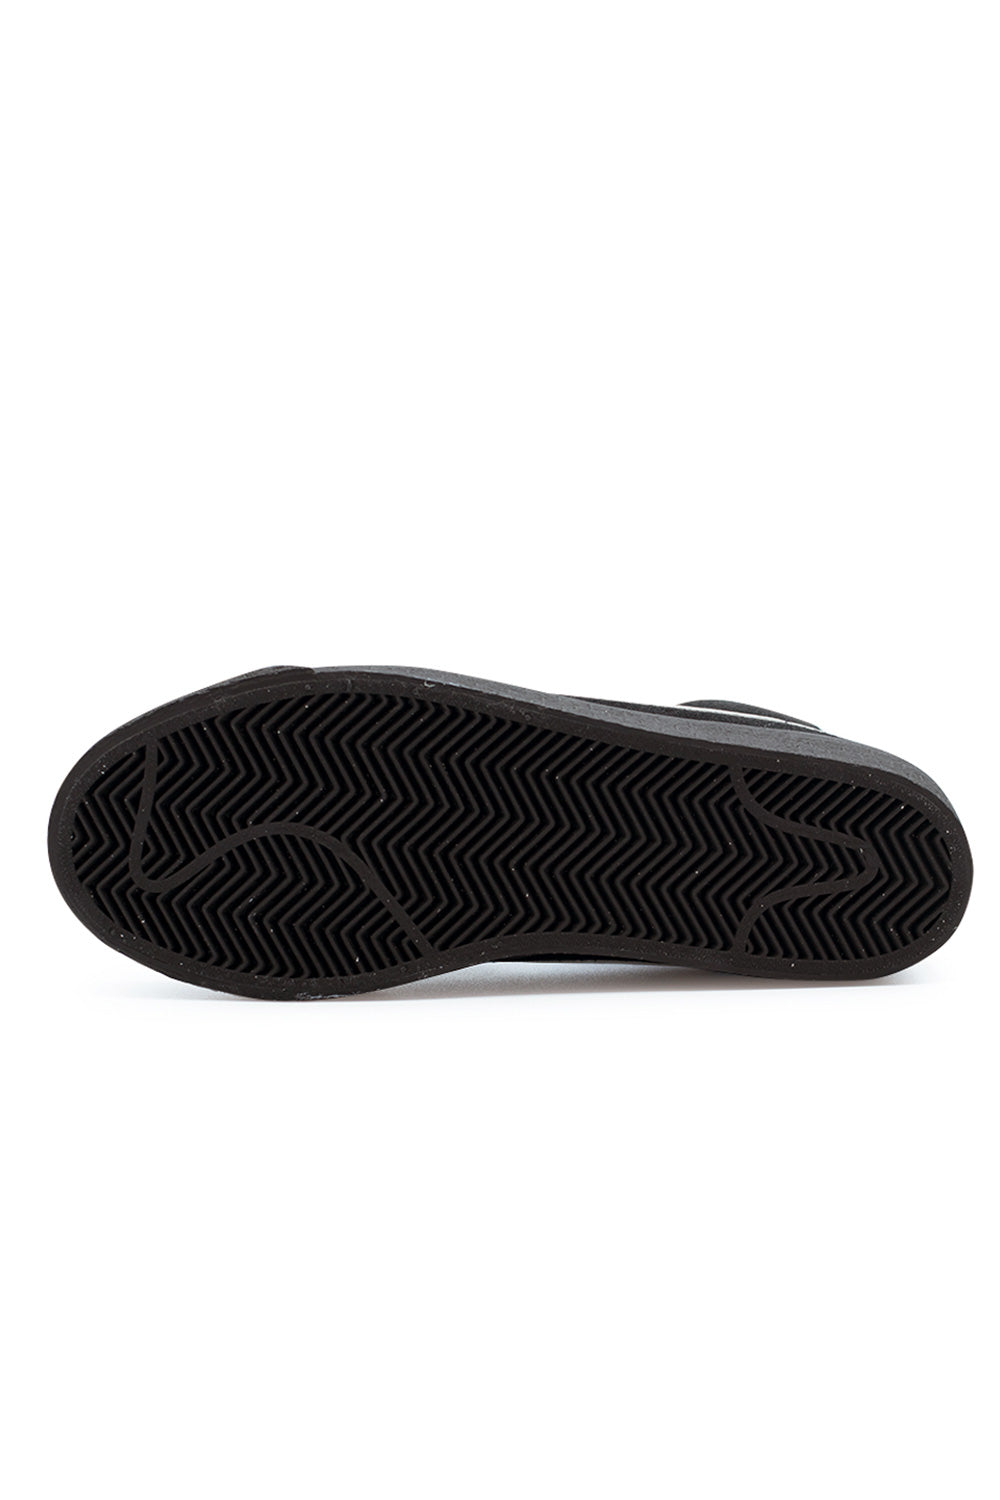 Nike SB Zoom Blazer Mid Shoe Black / White / Black / Black - BONKERS